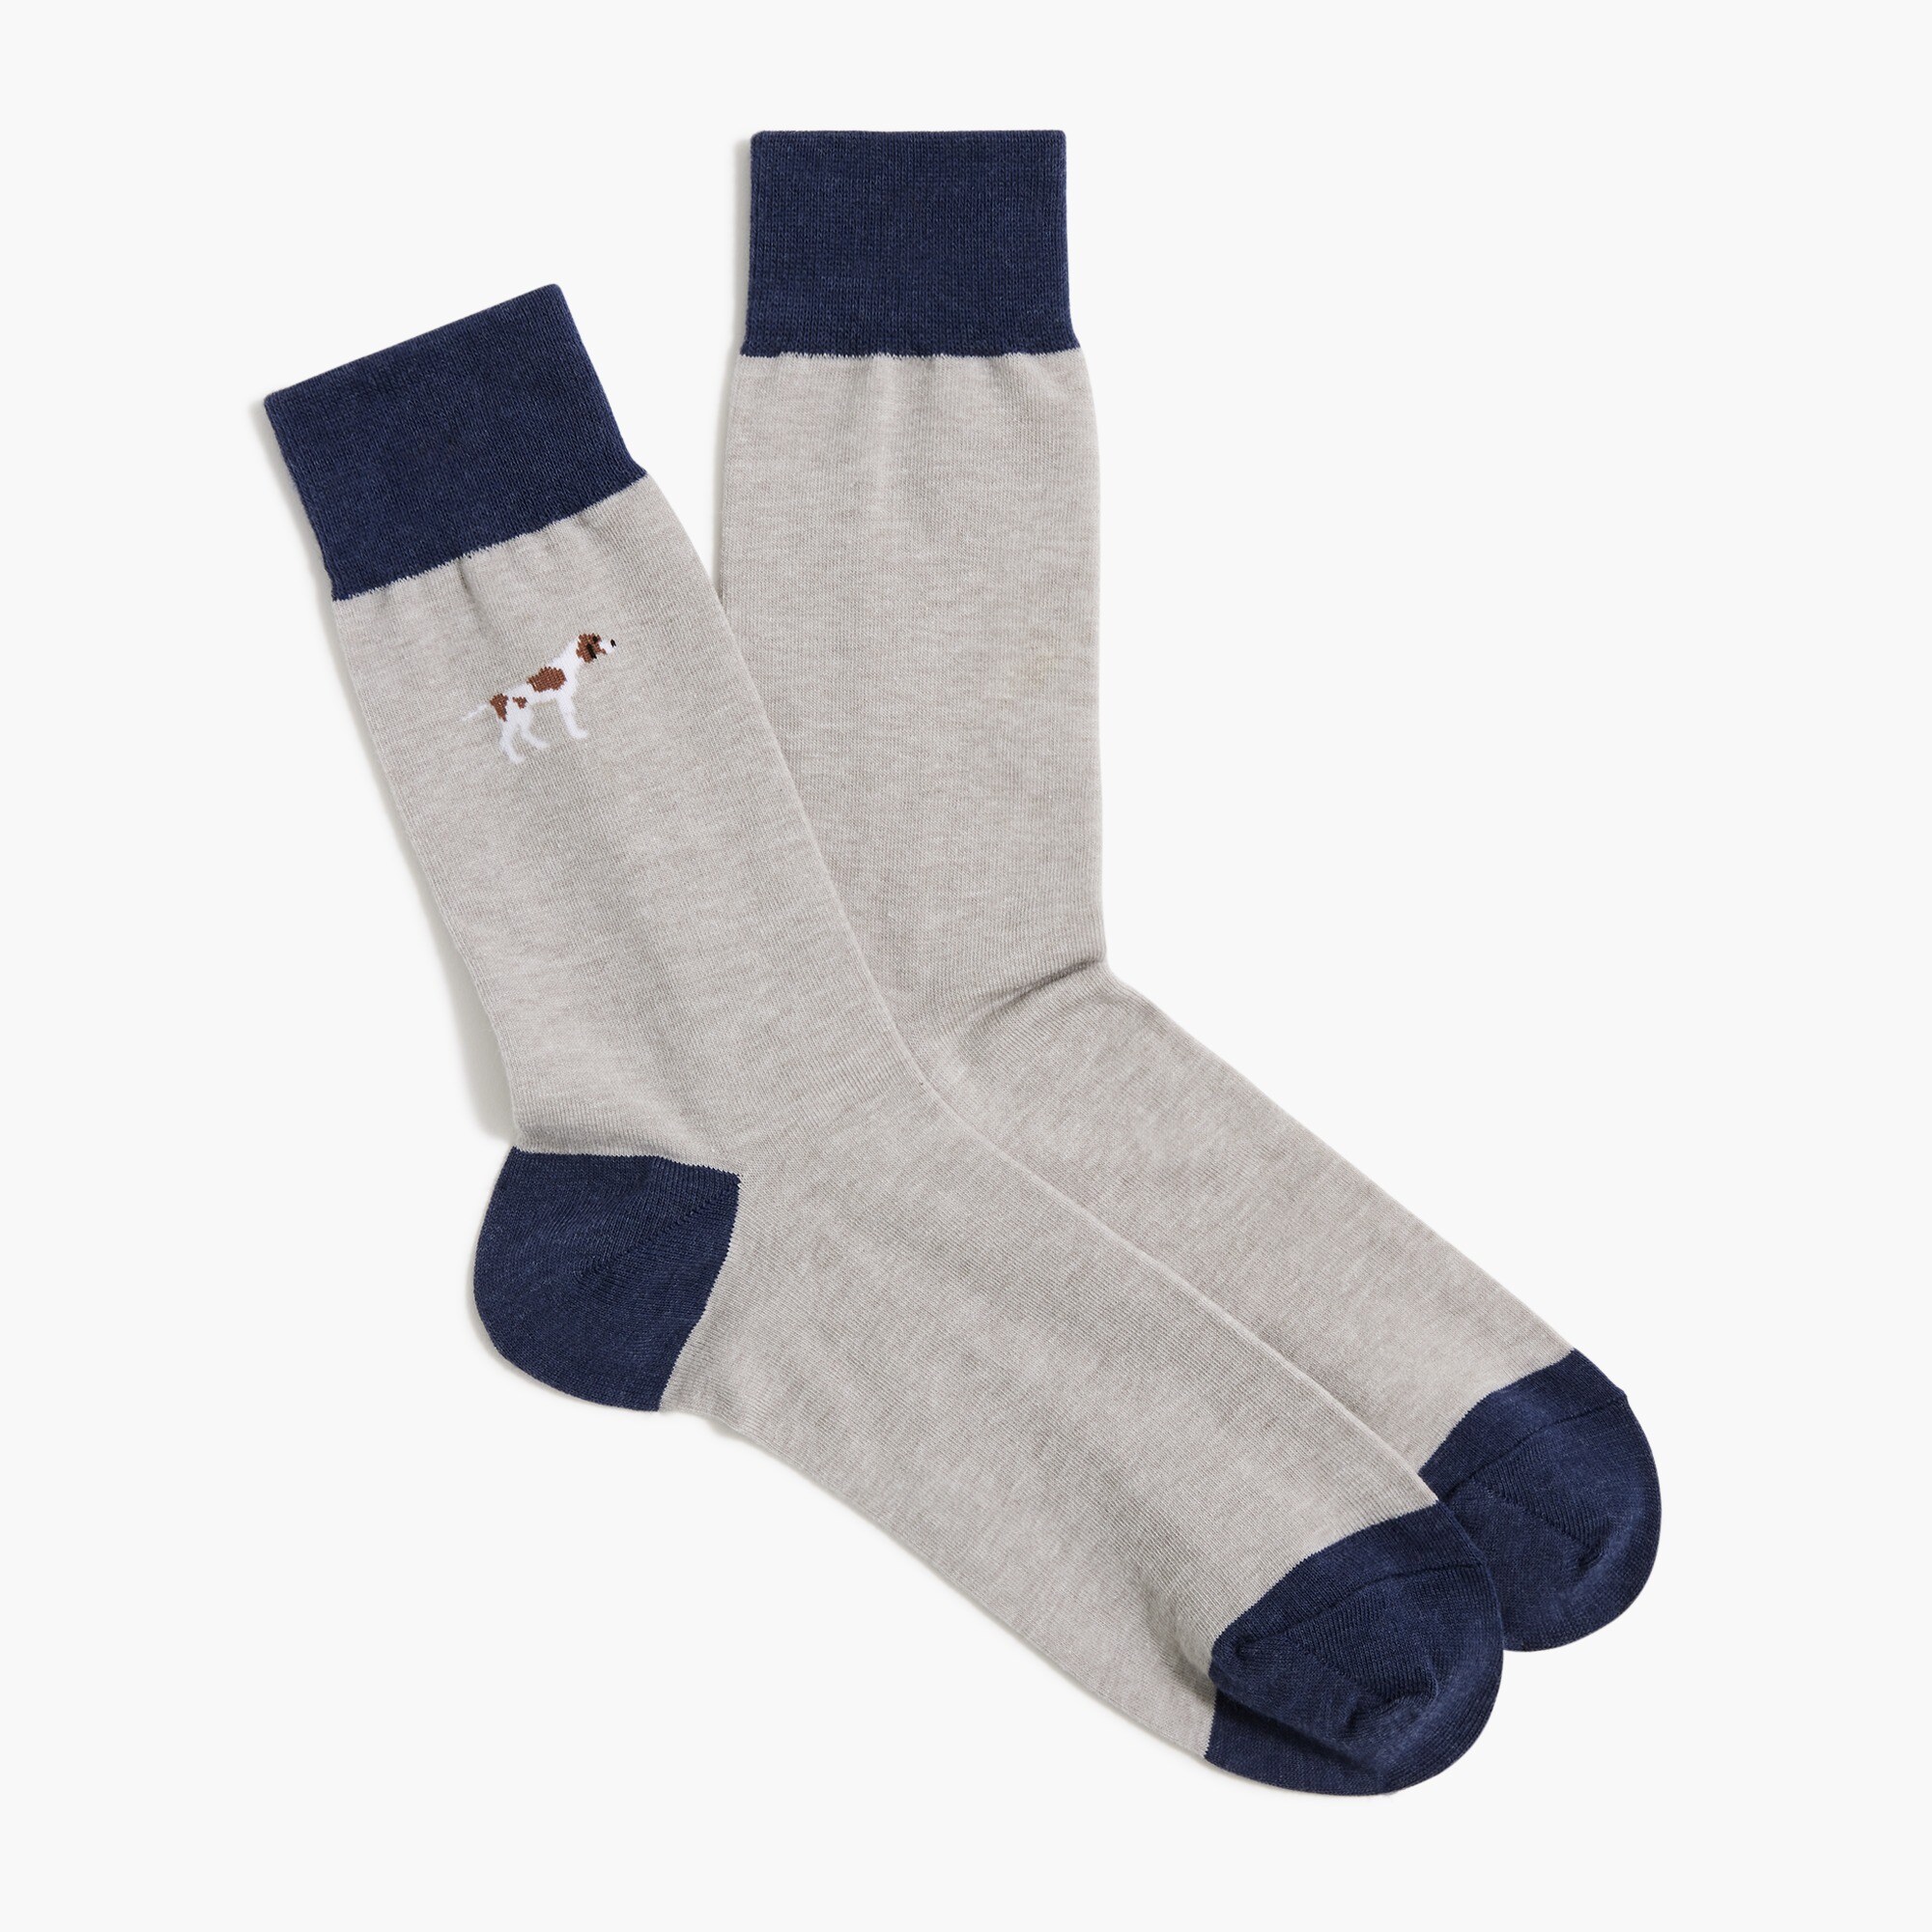  Pointer dog socks